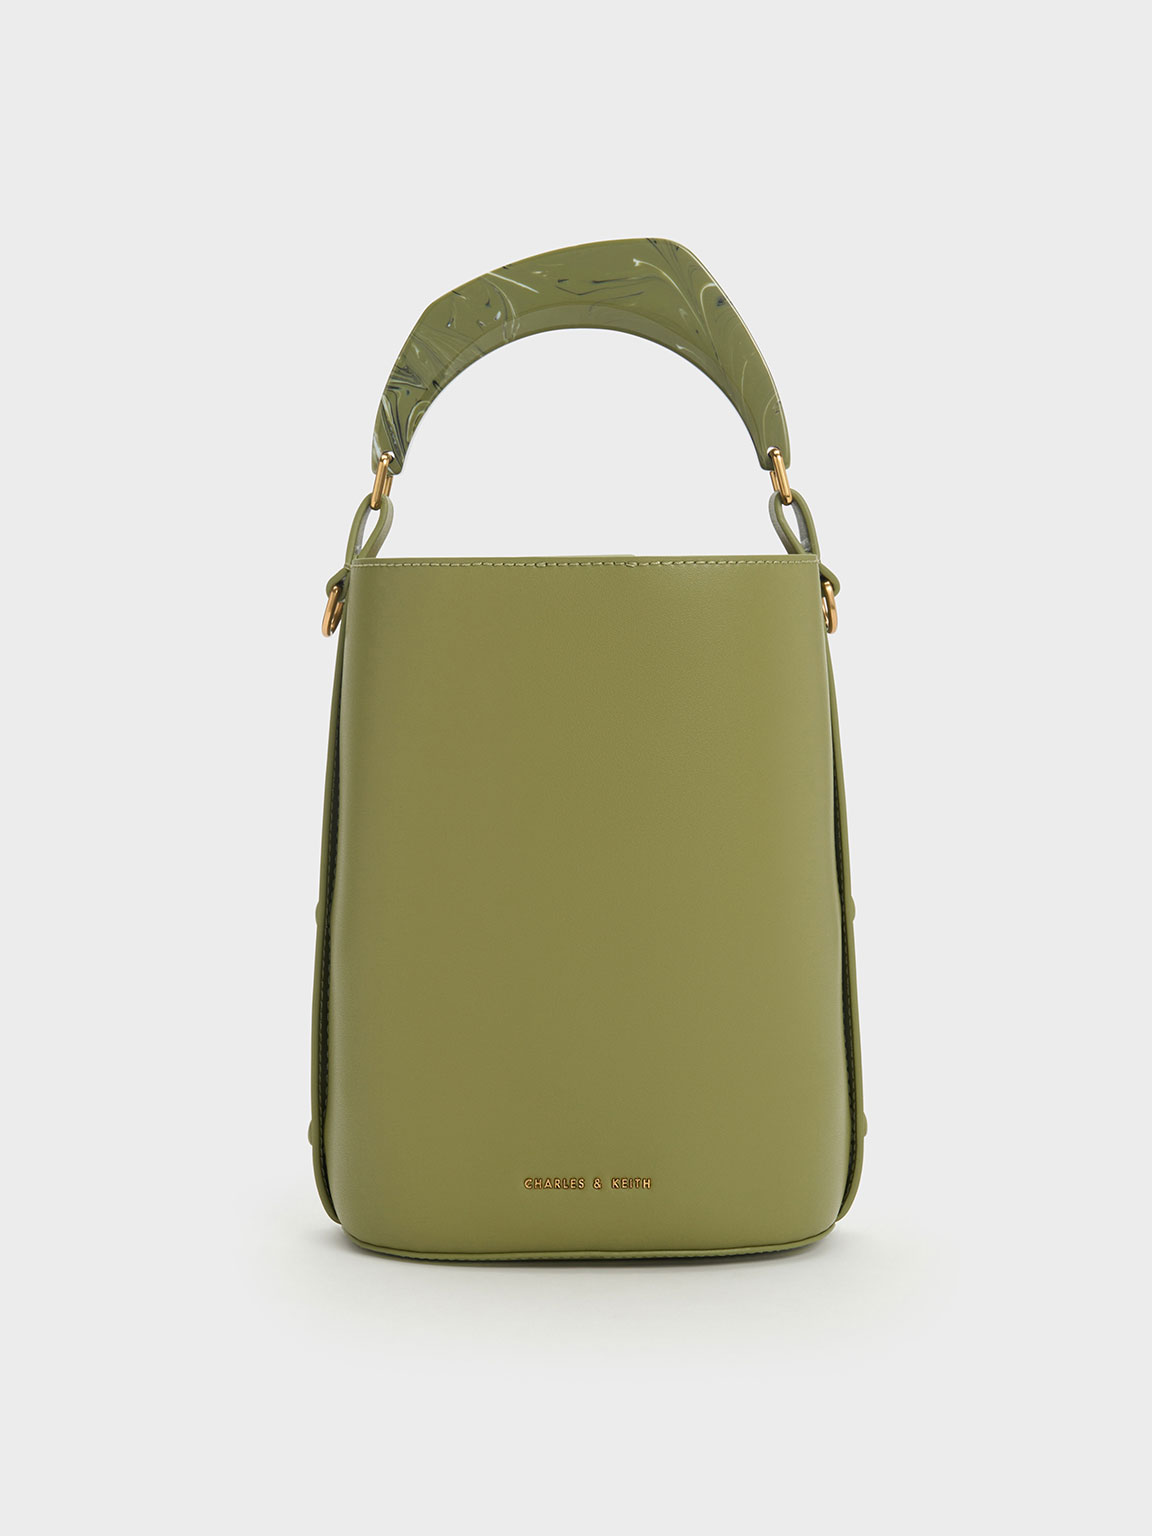 21 The Lana Midi Bucket Bag ideas